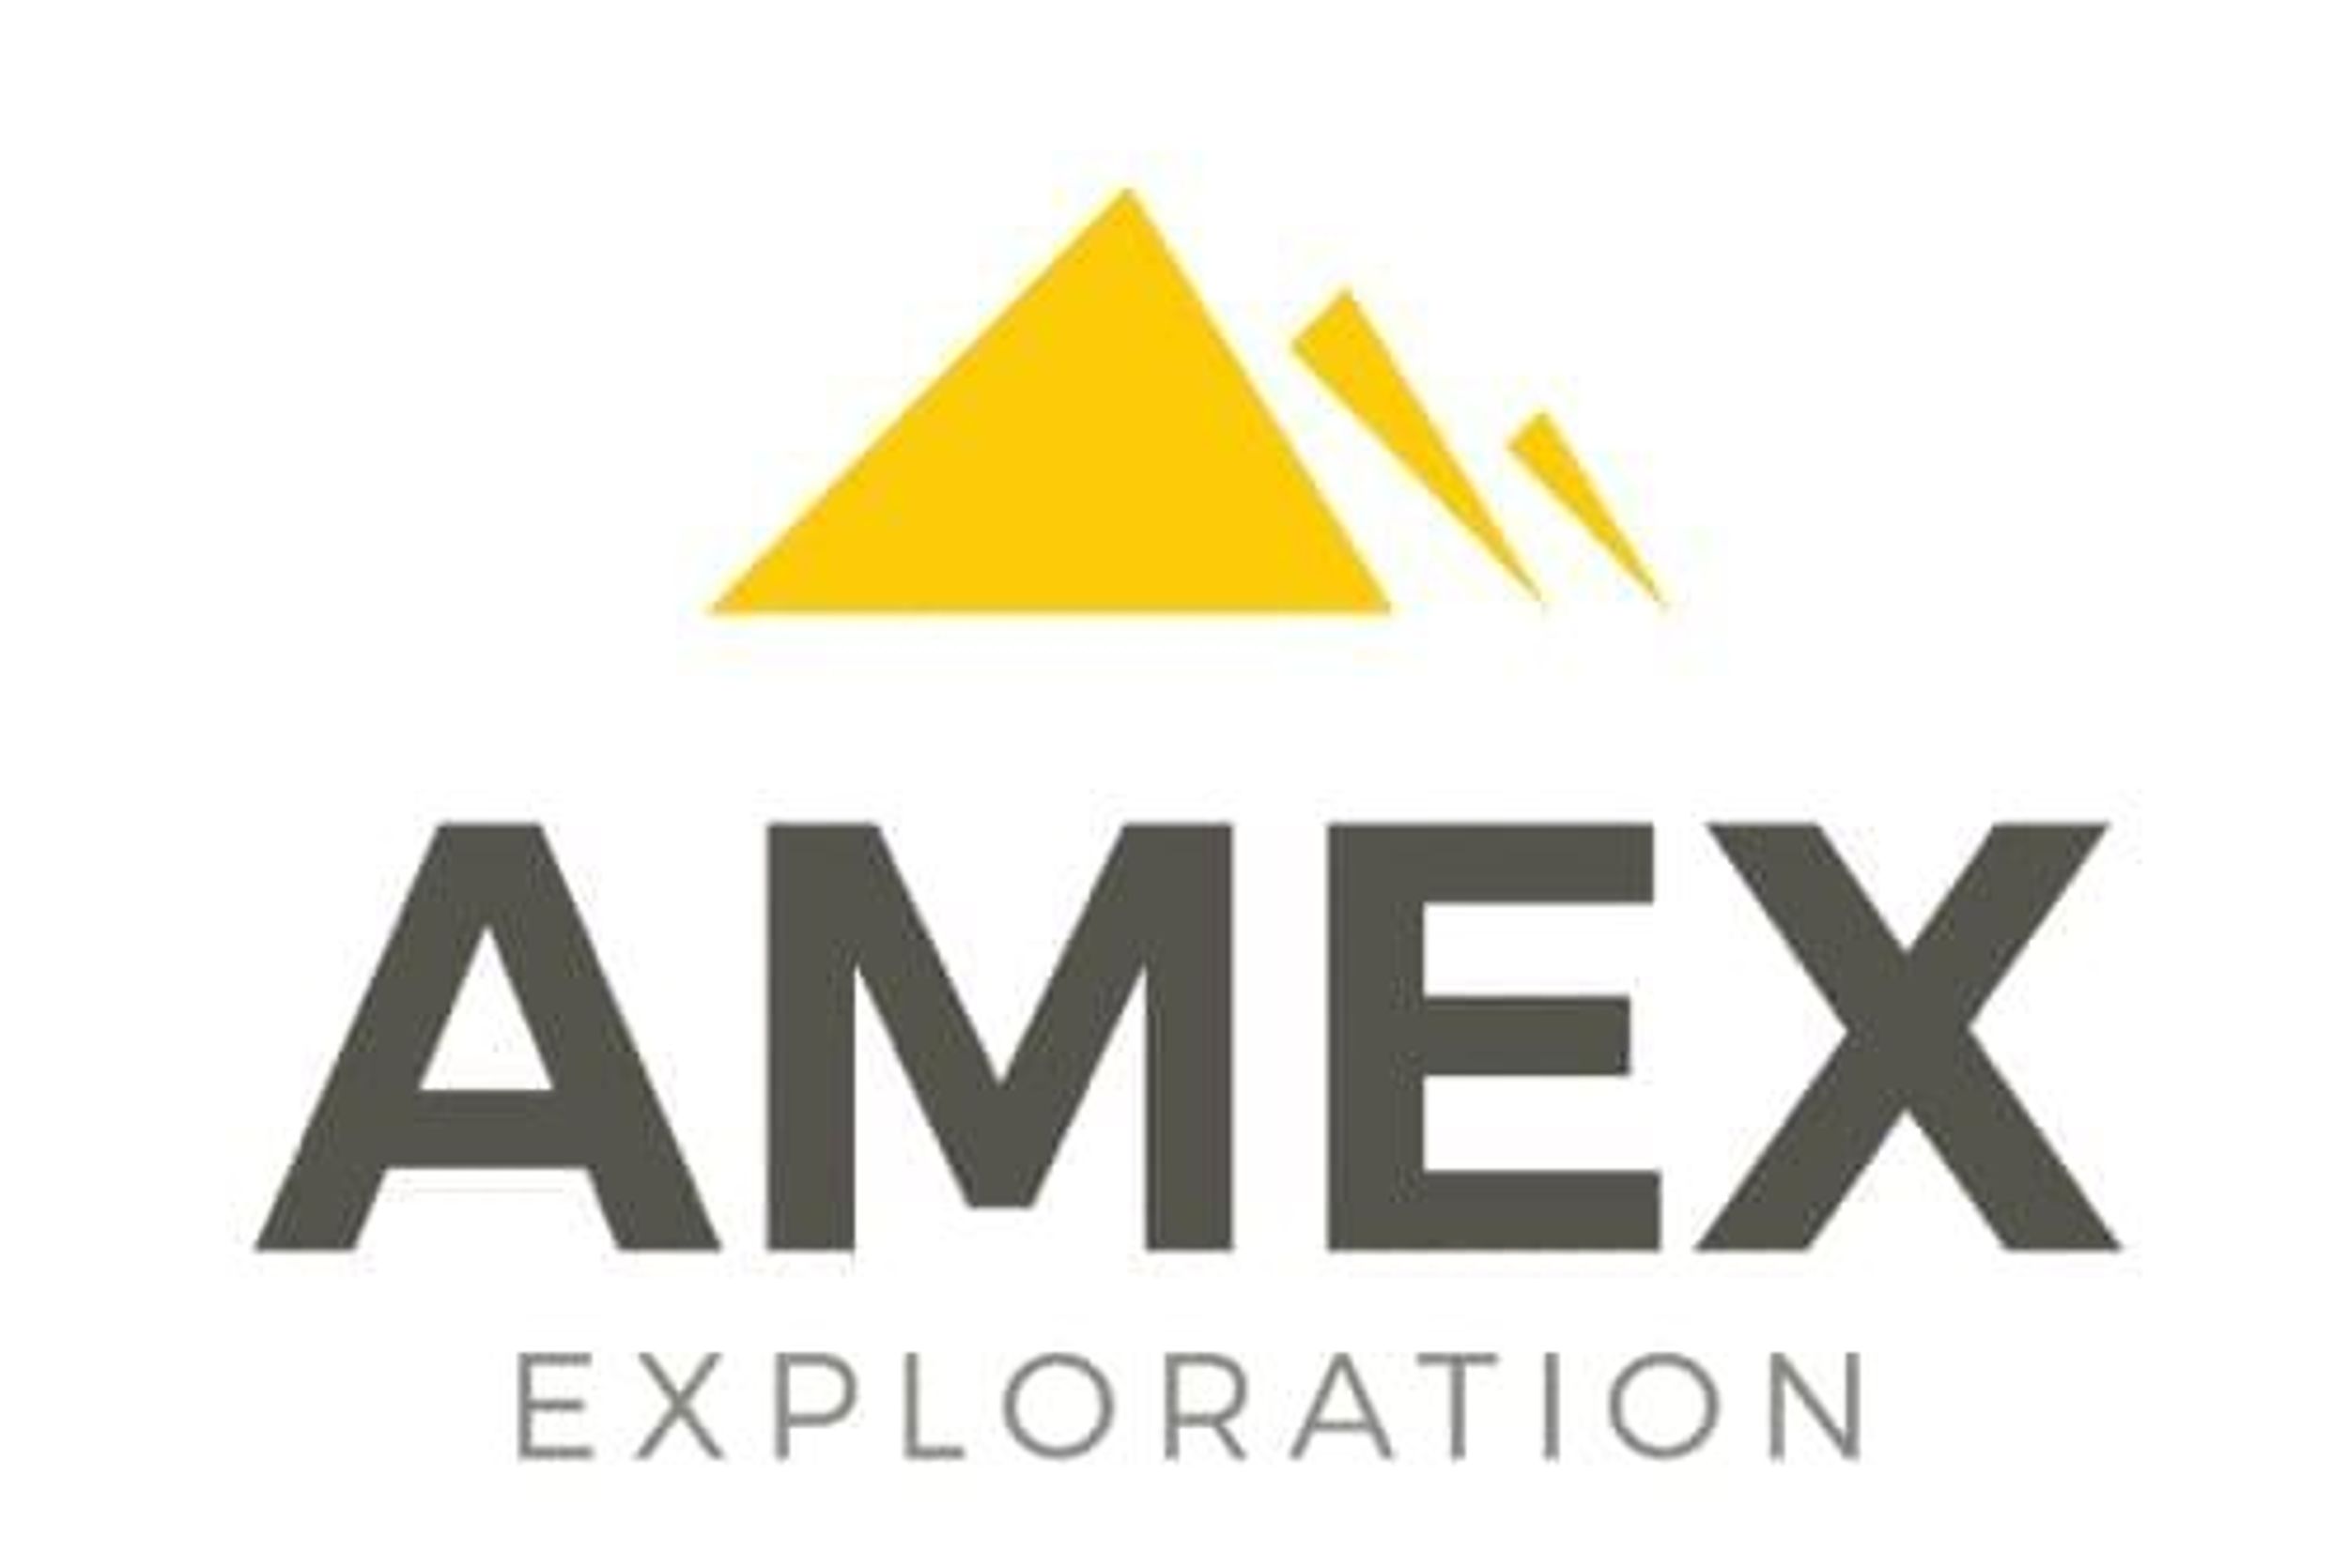 Amex Exploration Inc.